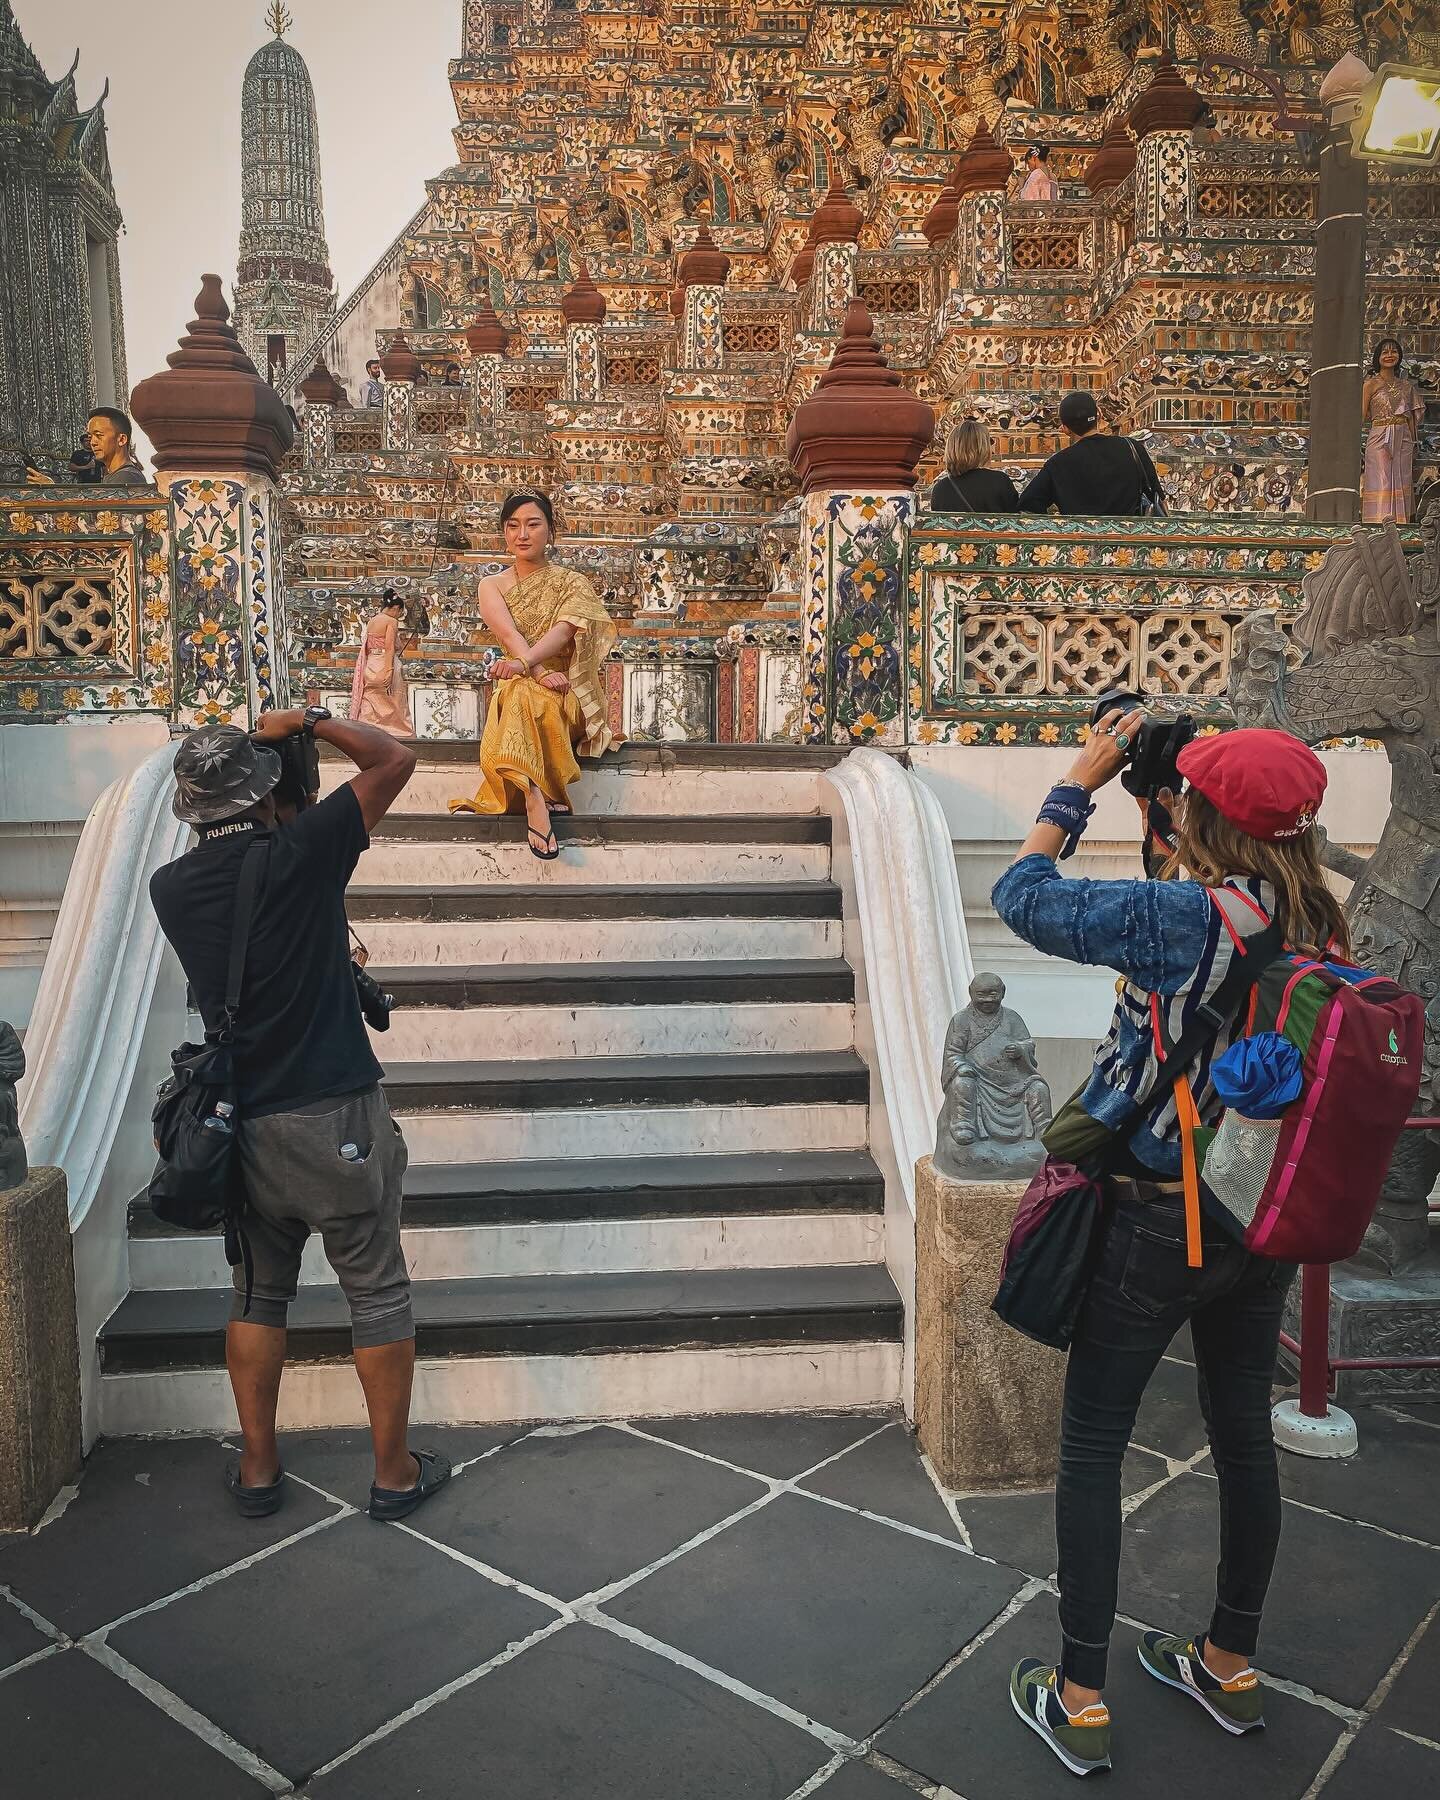 #bangkok #thailand #visitthailand 
#winterthailand #portraitphotography
#33trekking #natgeo #natgeotravel
#photography #worldtravel #shotoniphone #travelphotography #travelandleisureasia #livelaughlove #adobe #lightroom #photoblog  #tourism #thailife